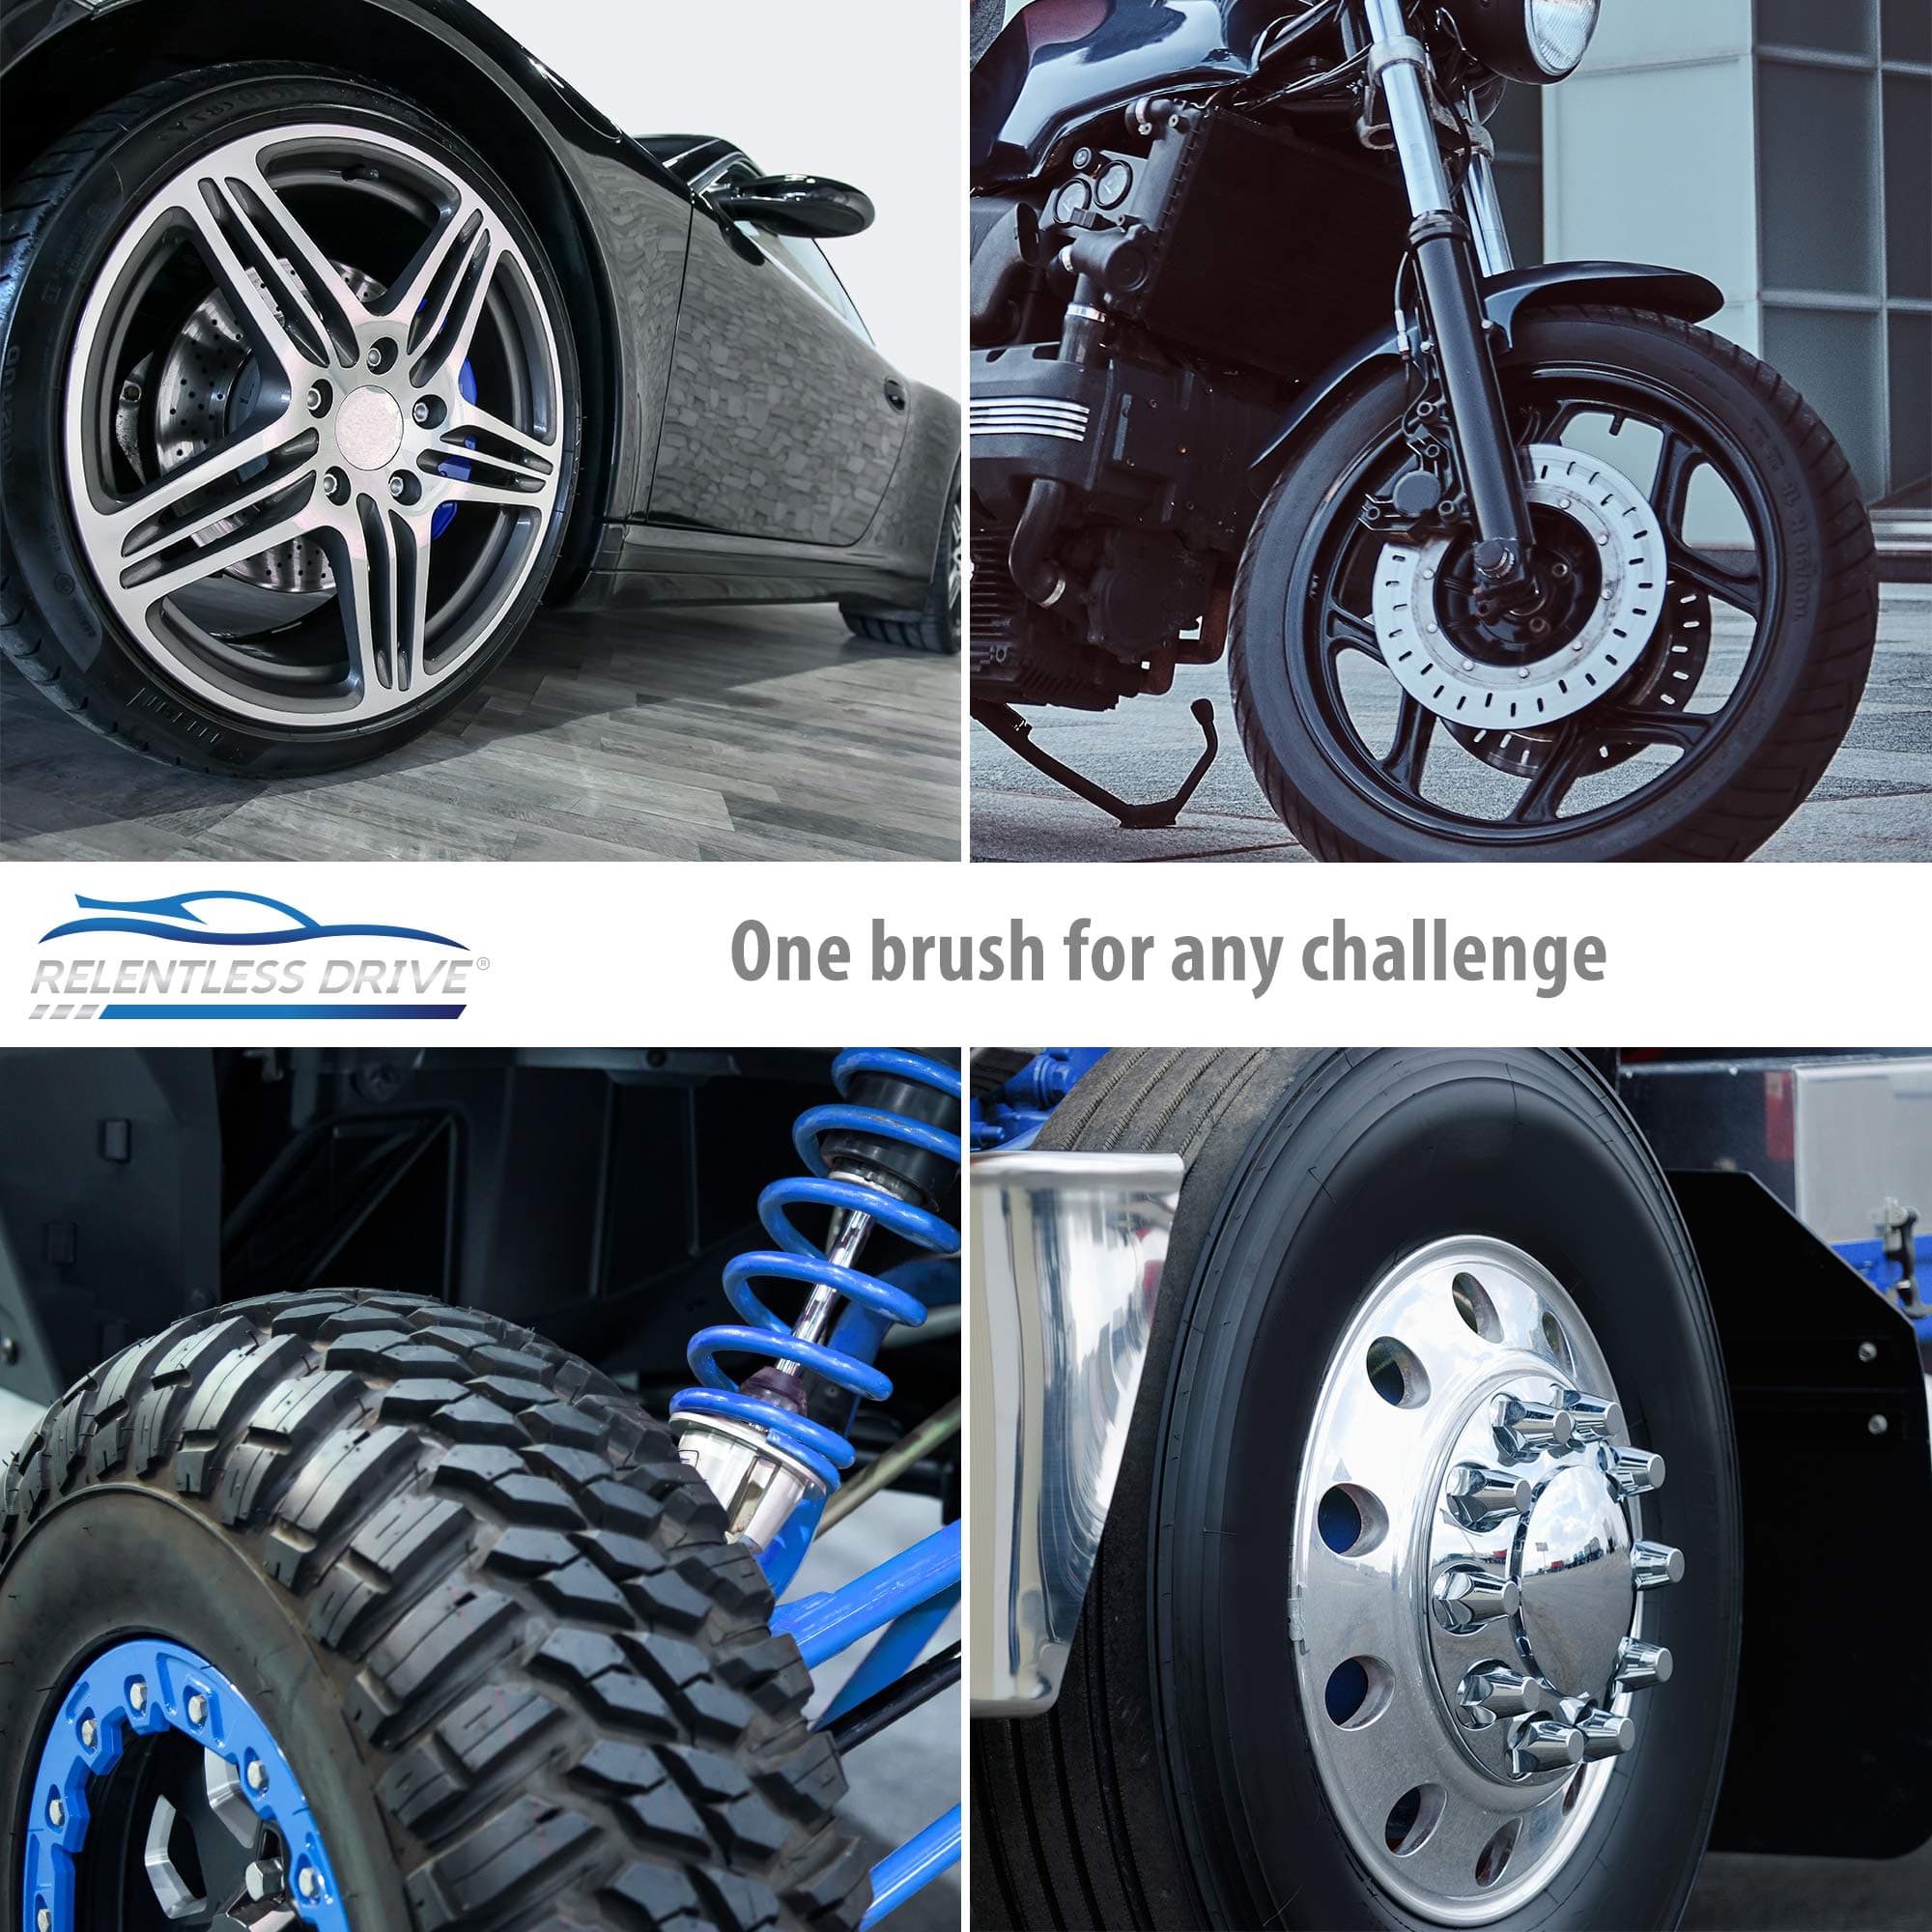 Relentless Drive Car Wheel Brush - Auto Detailing Car Wash Brush, Ergo